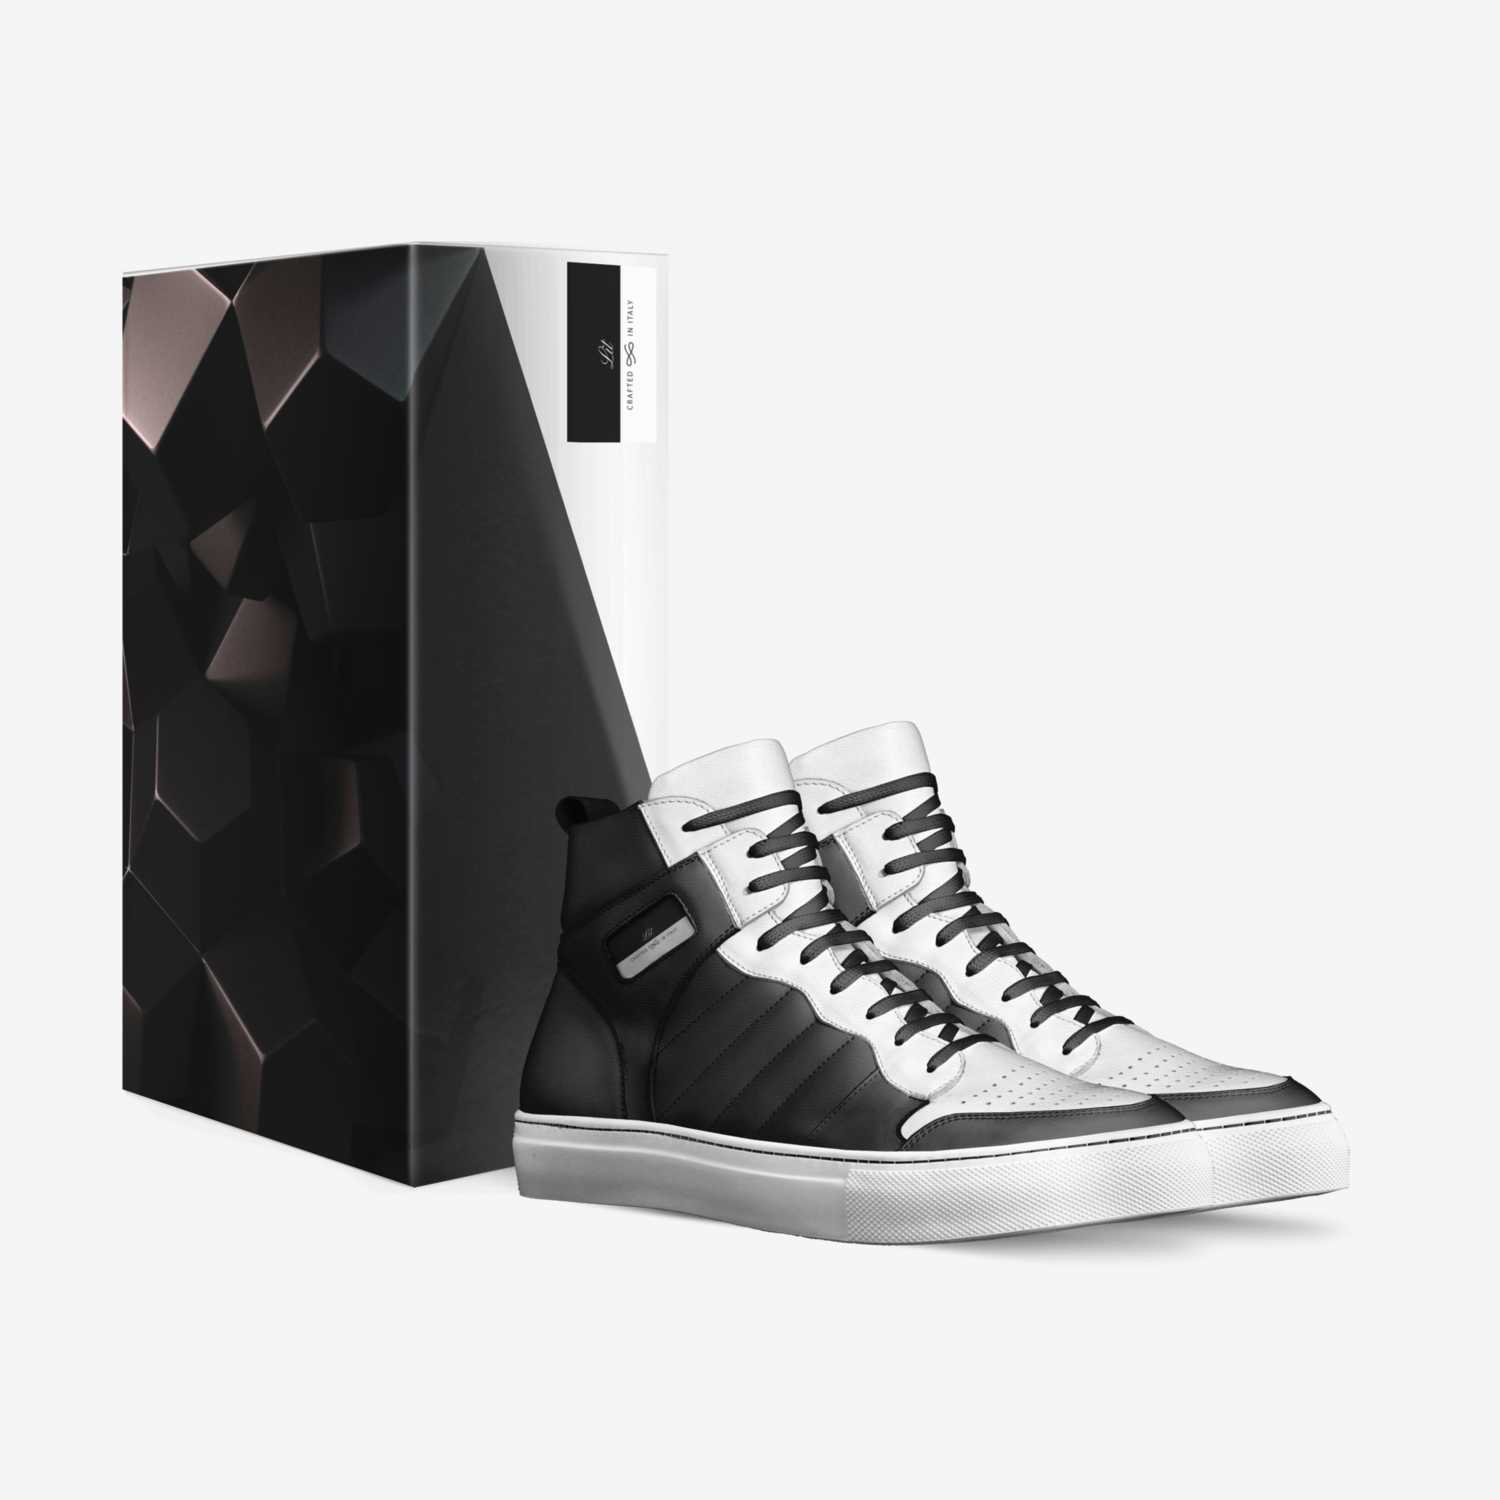 Laleb Cackey custom made in Italy shoes by Caleb Lackey | Box view